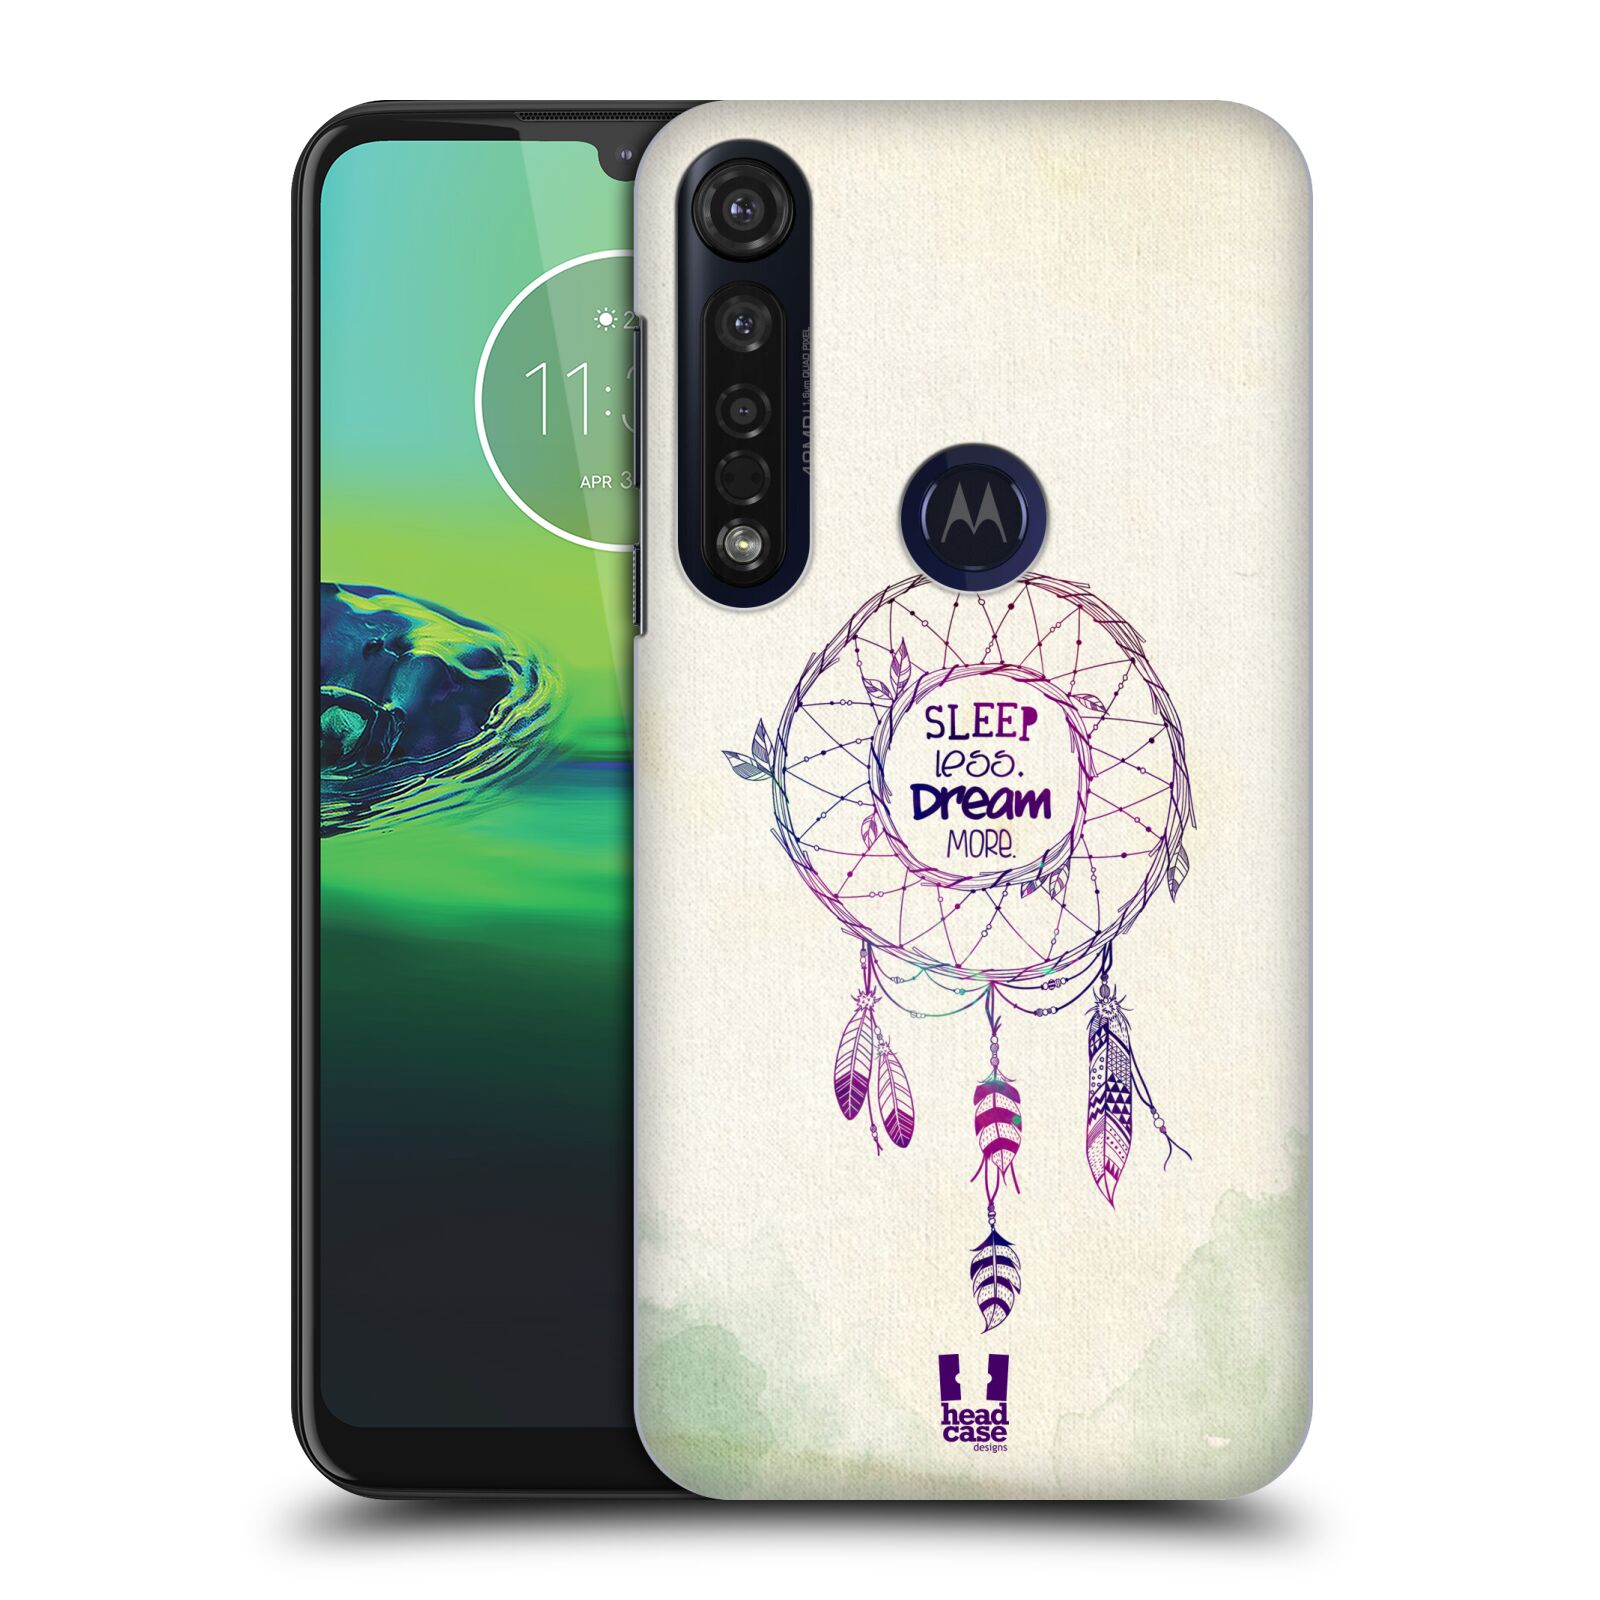 Pouzdro na mobil Motorola Moto G8 PLUS - HEAD CASE - vzor Lapač snů ZELENÁ A FIALOVÁ